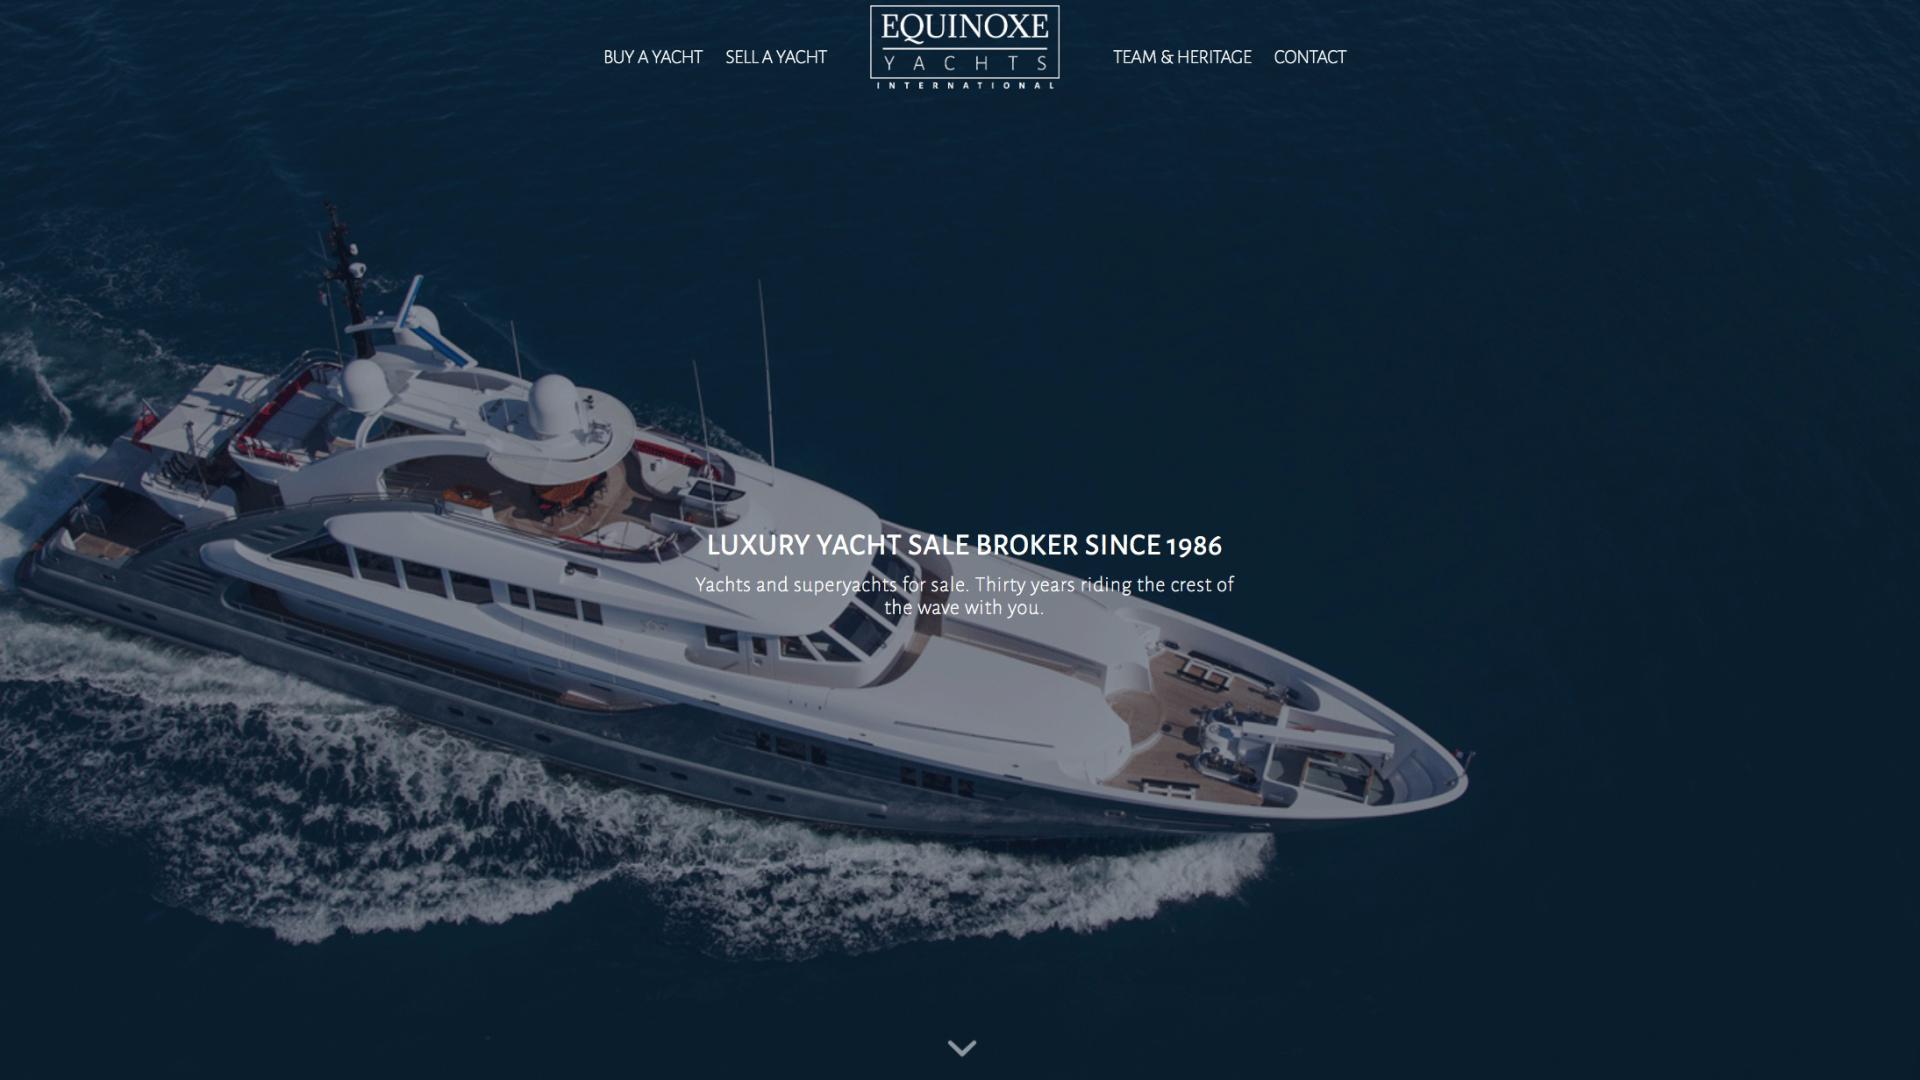 Equinoxe Yachts International